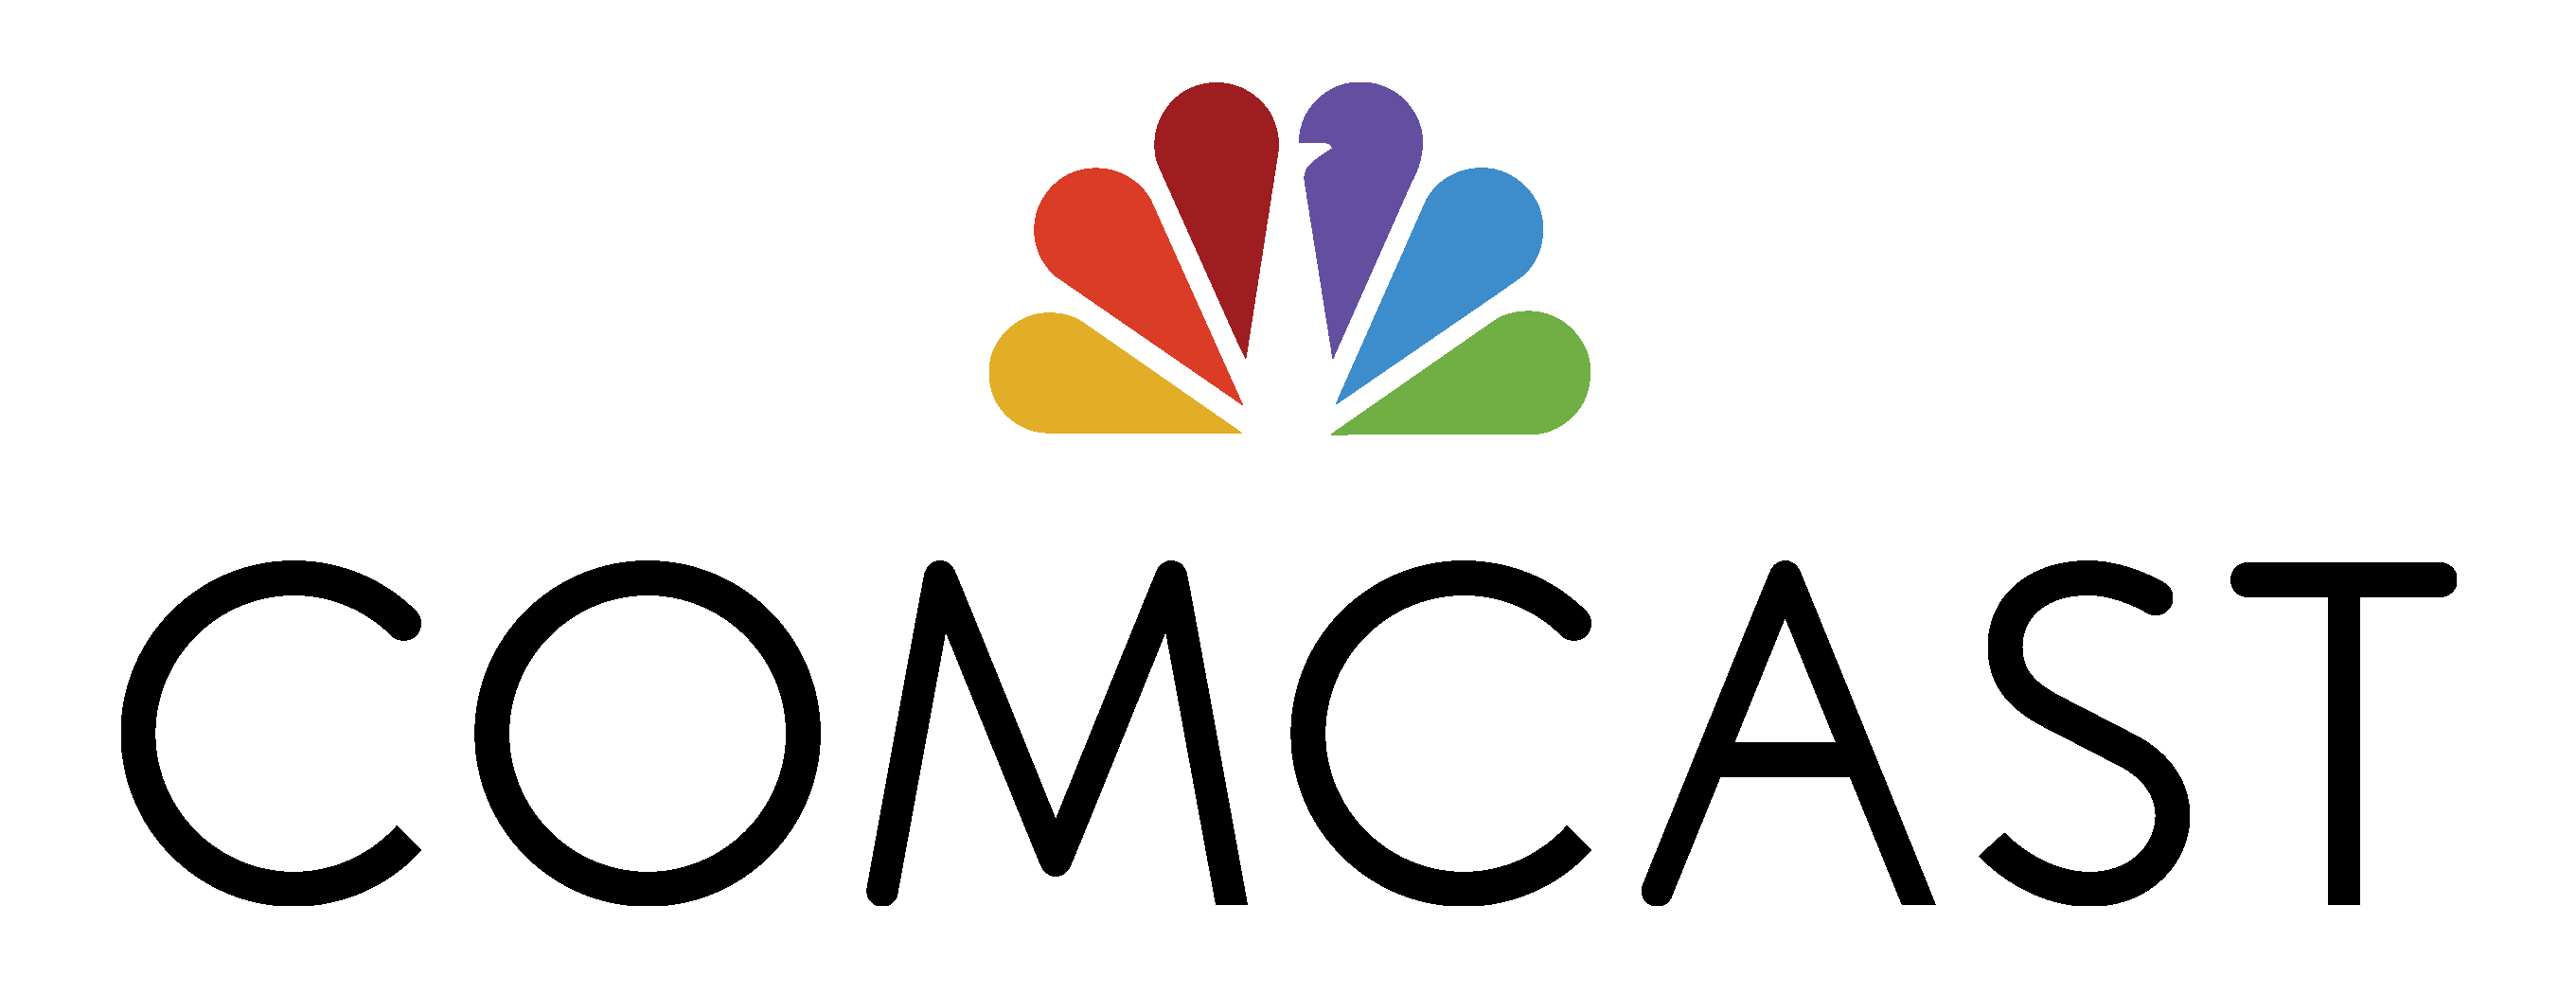 Download Comcast Logo Png Image For Free